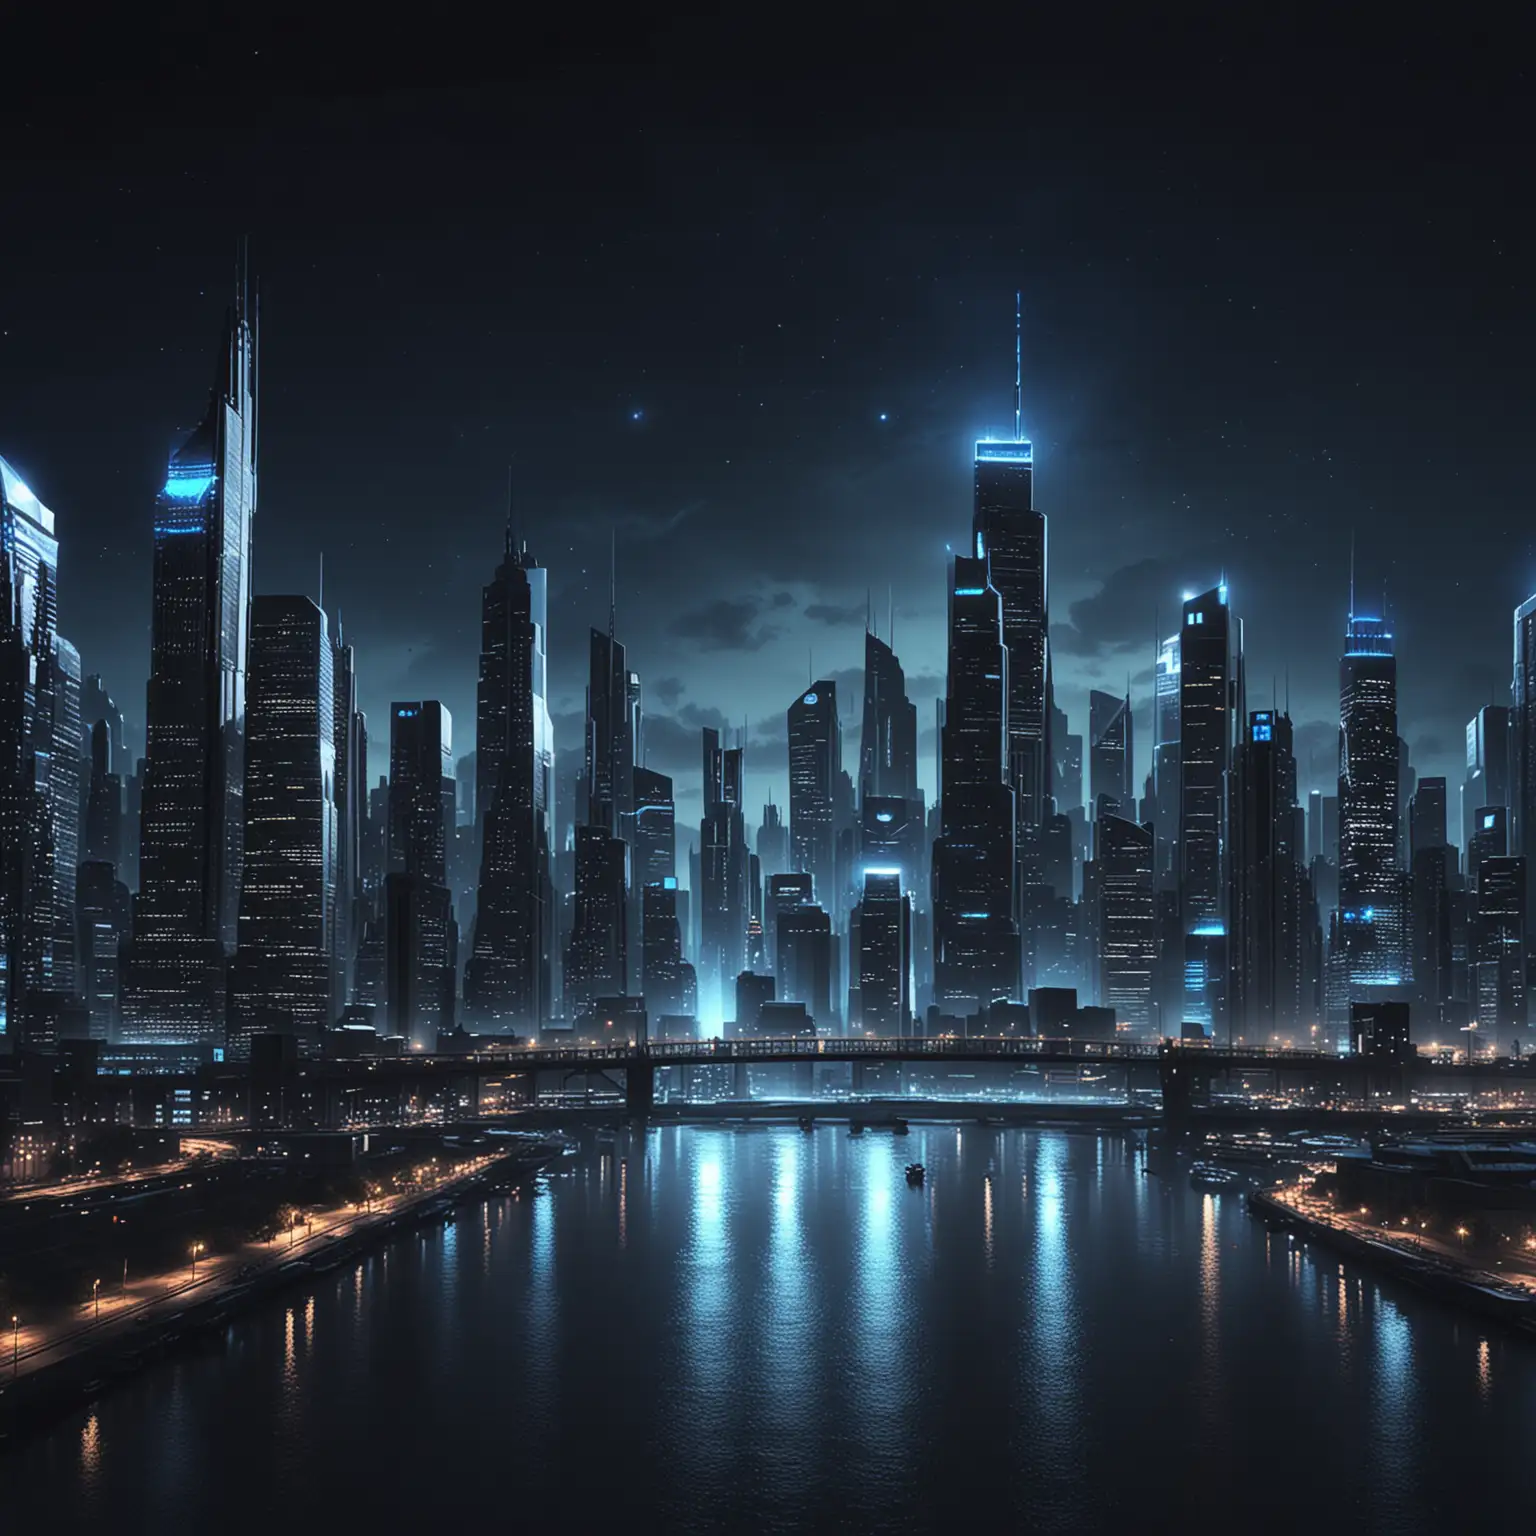 High Definition Night City Skyline with Blue Lights in Dark Cinematic Lighting